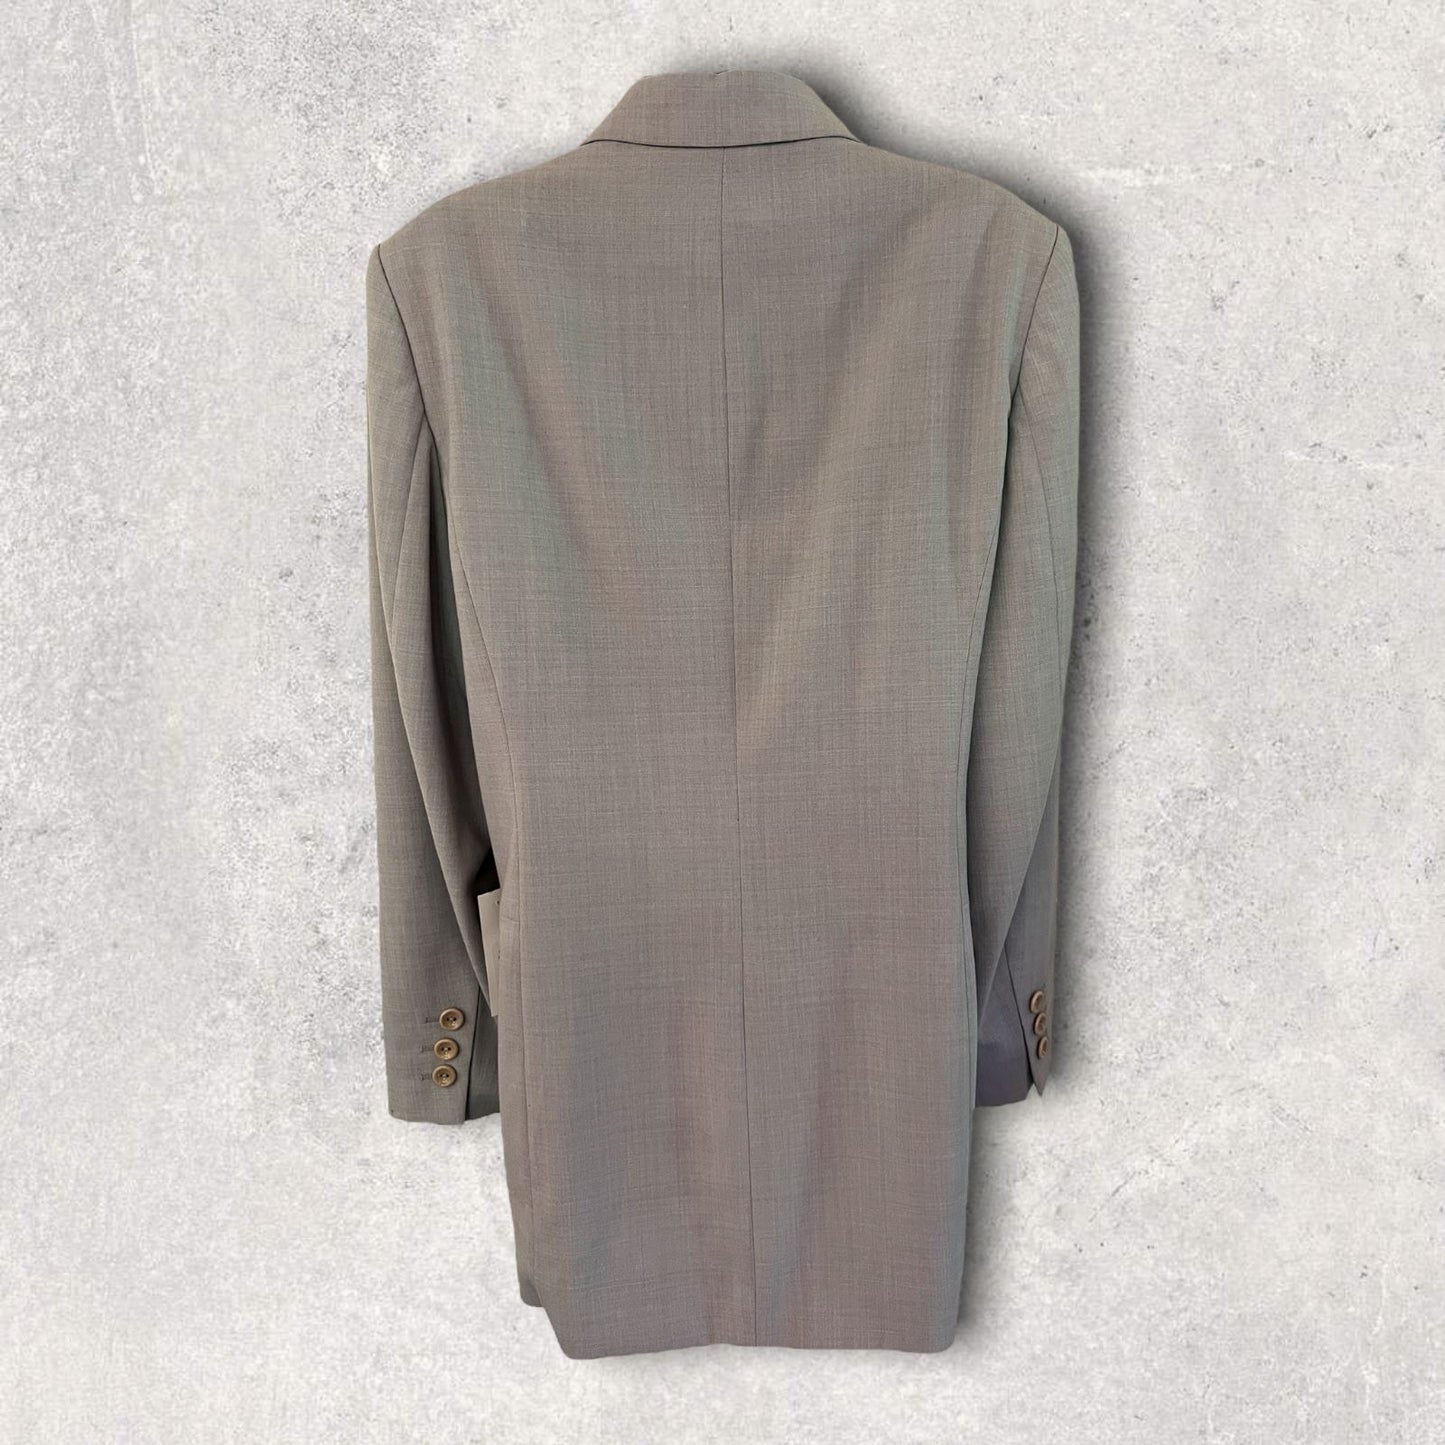 Gina B by Heidemann Vintage Dove Grey Virgin Wool Blend Jacket UK 16 US 12 EU 44 Timeless Fashions